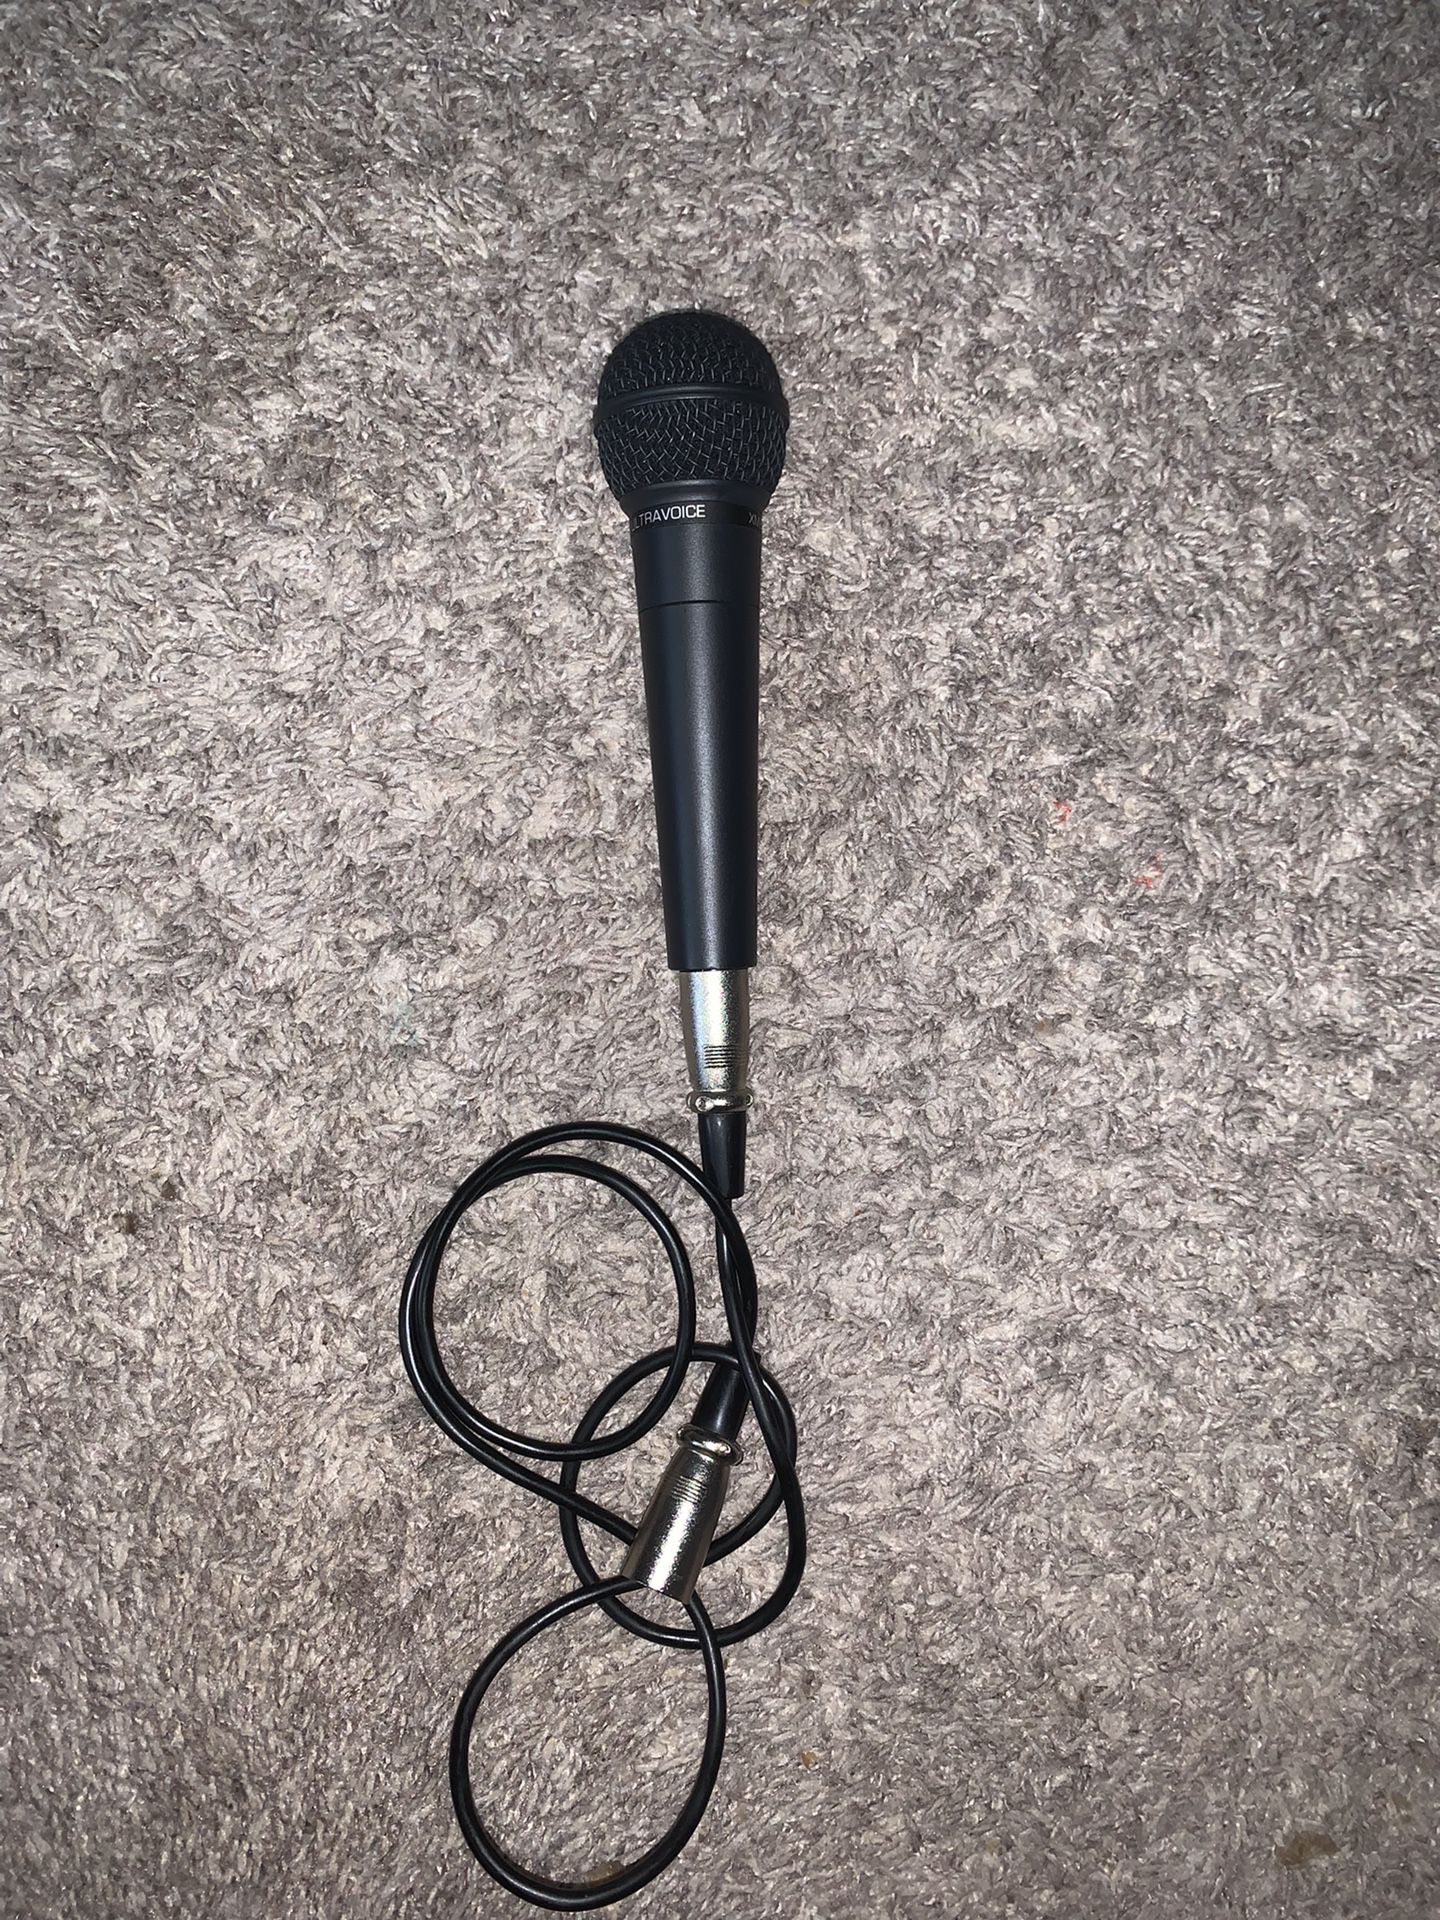 Behringer Microphone Xm8500